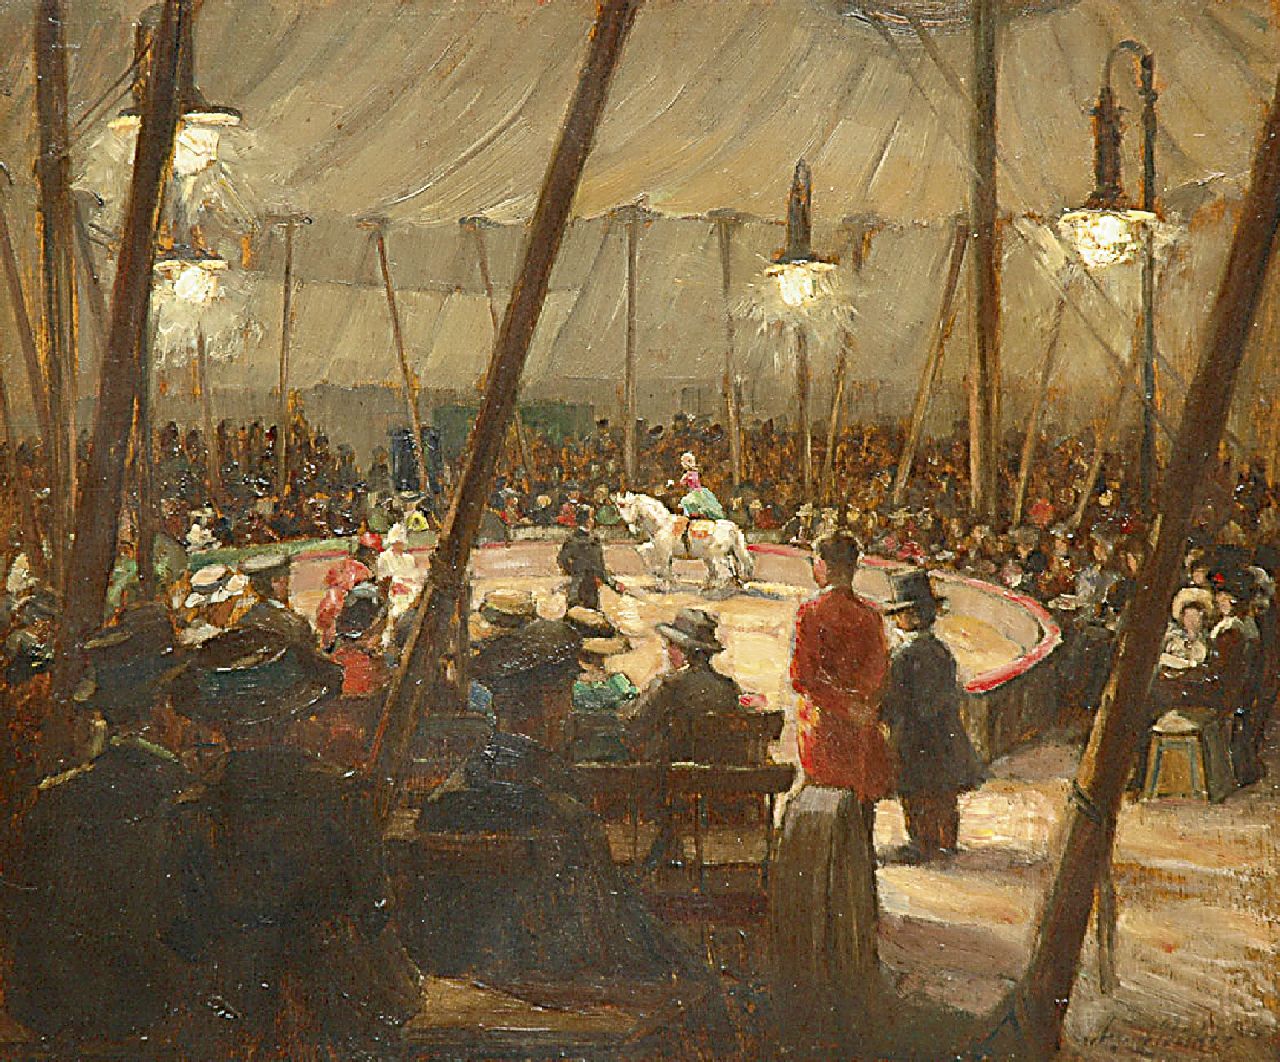 Böcher A.  | August Böcher, At the circus, Öl auf Holz 42,6 x 50,0 cm, signed l.r.